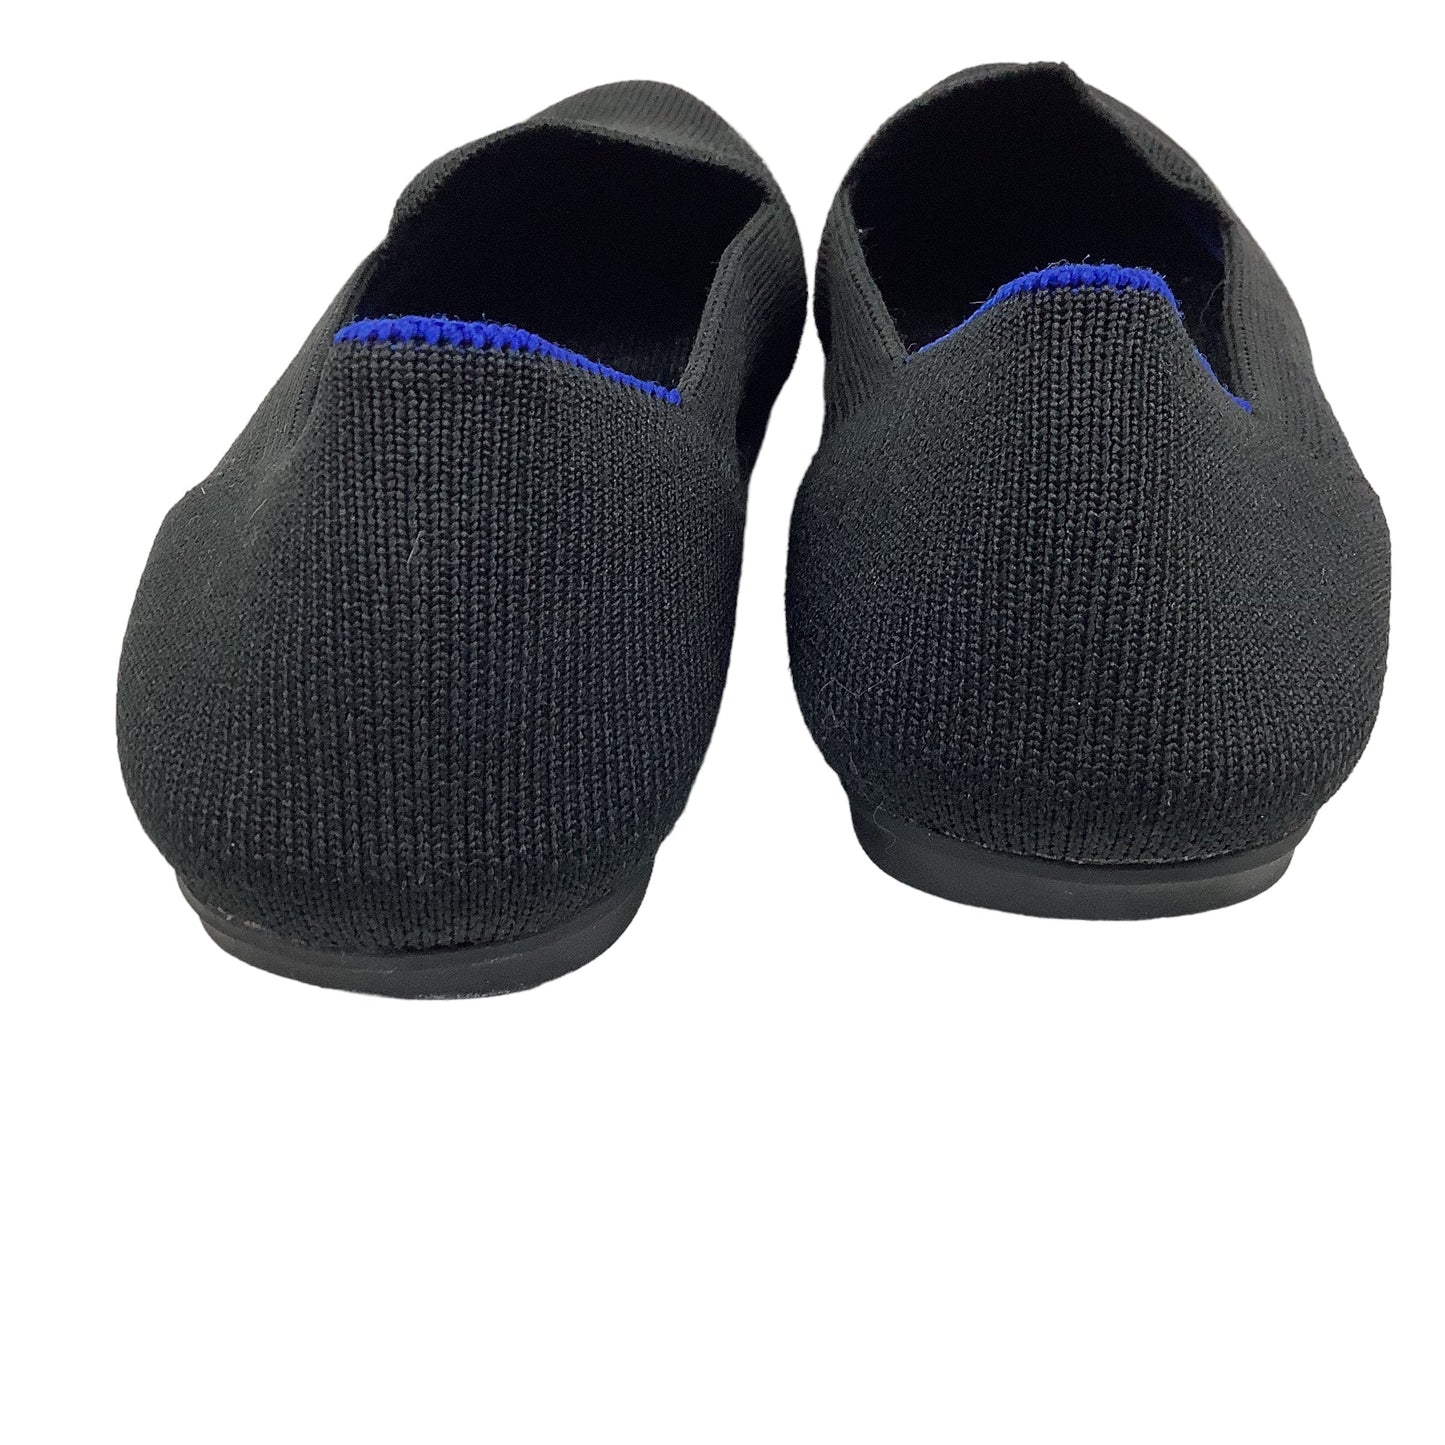 Black Shoes Flats Rothys, Size 7.5